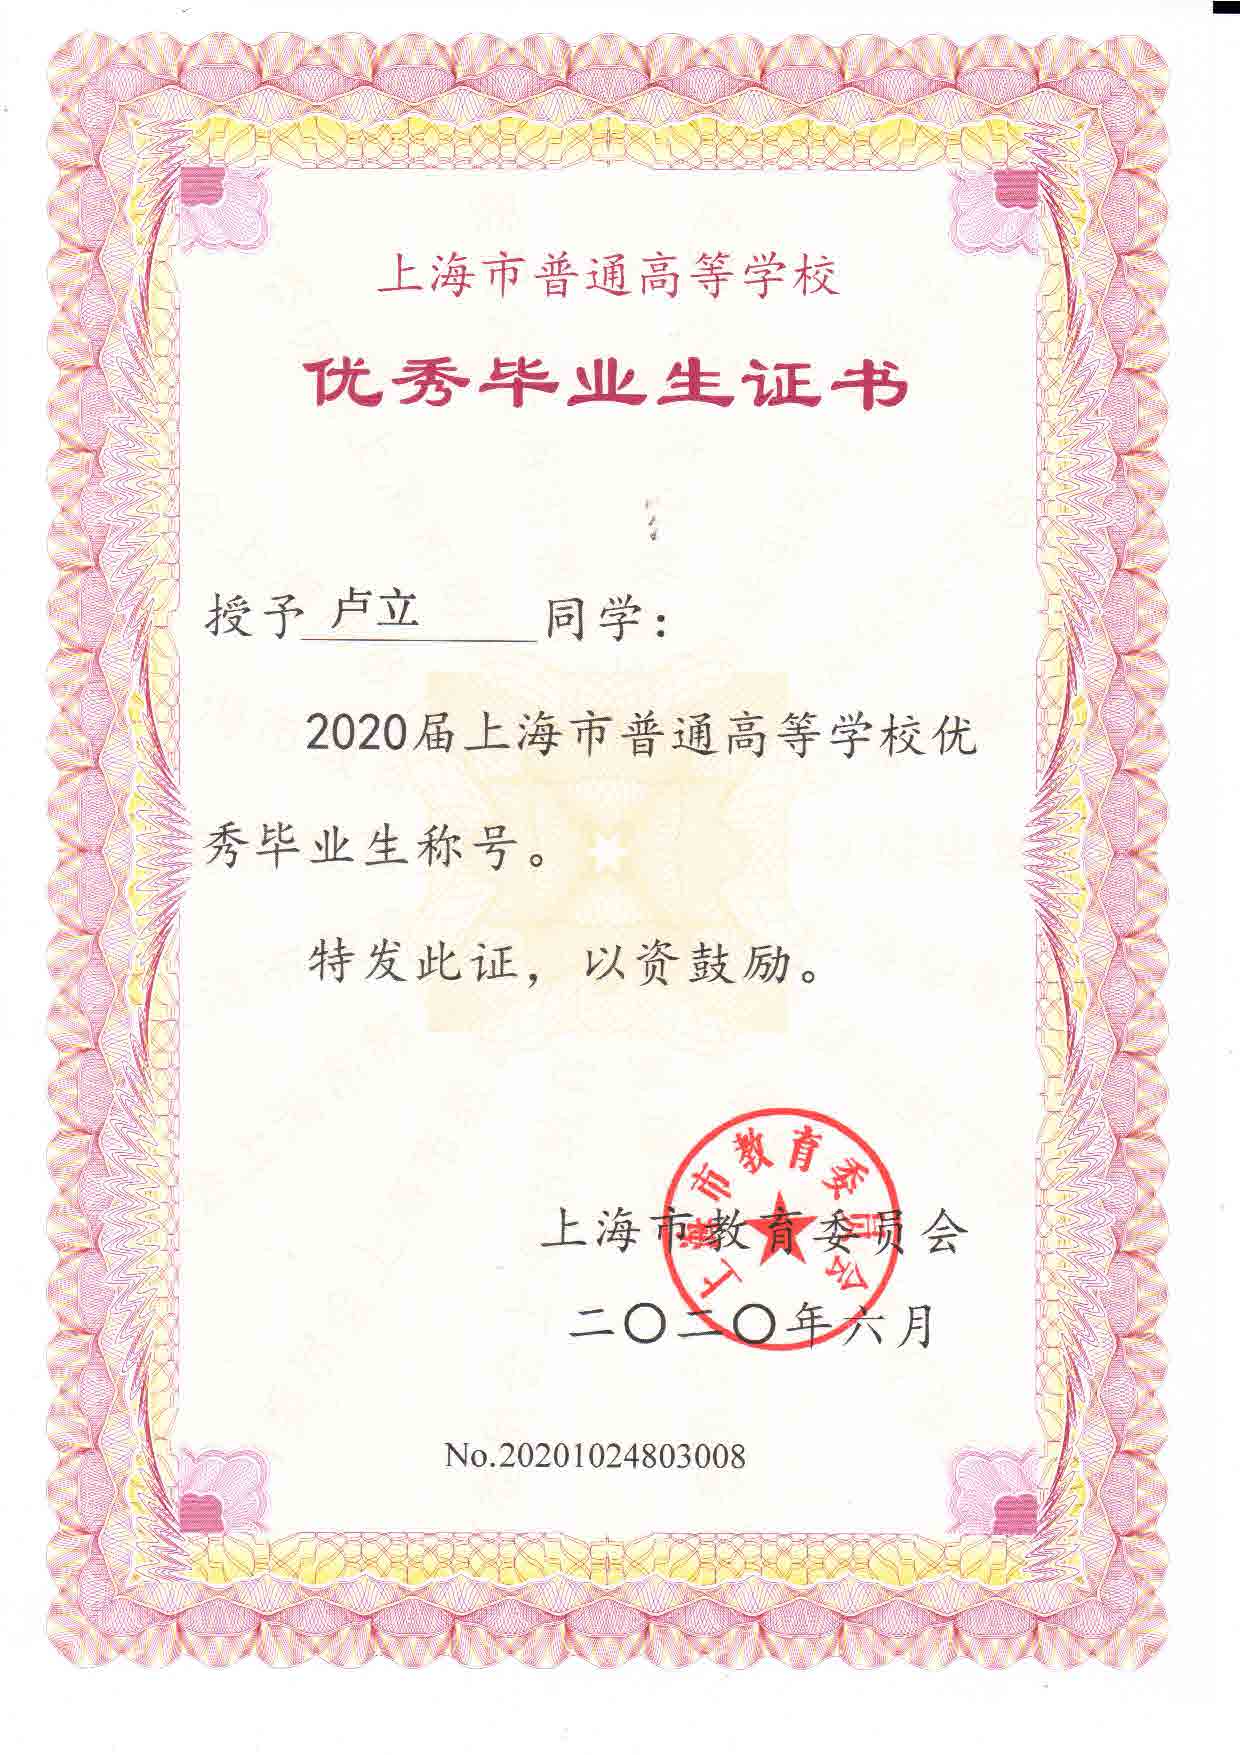 Outstanding Graduate of Shanghai